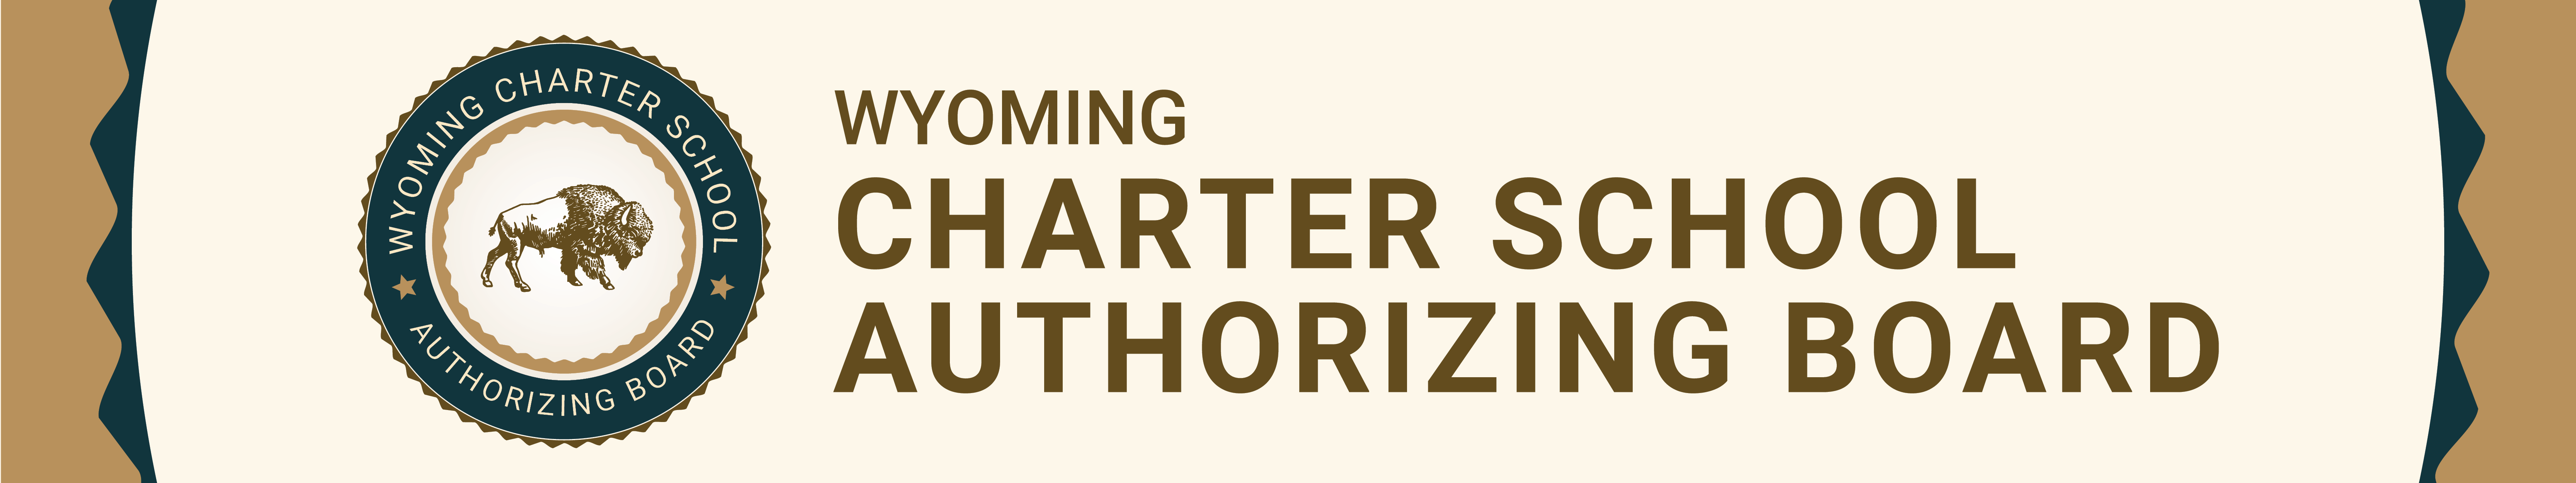 Wyoming Charter School Authorizing Board logo